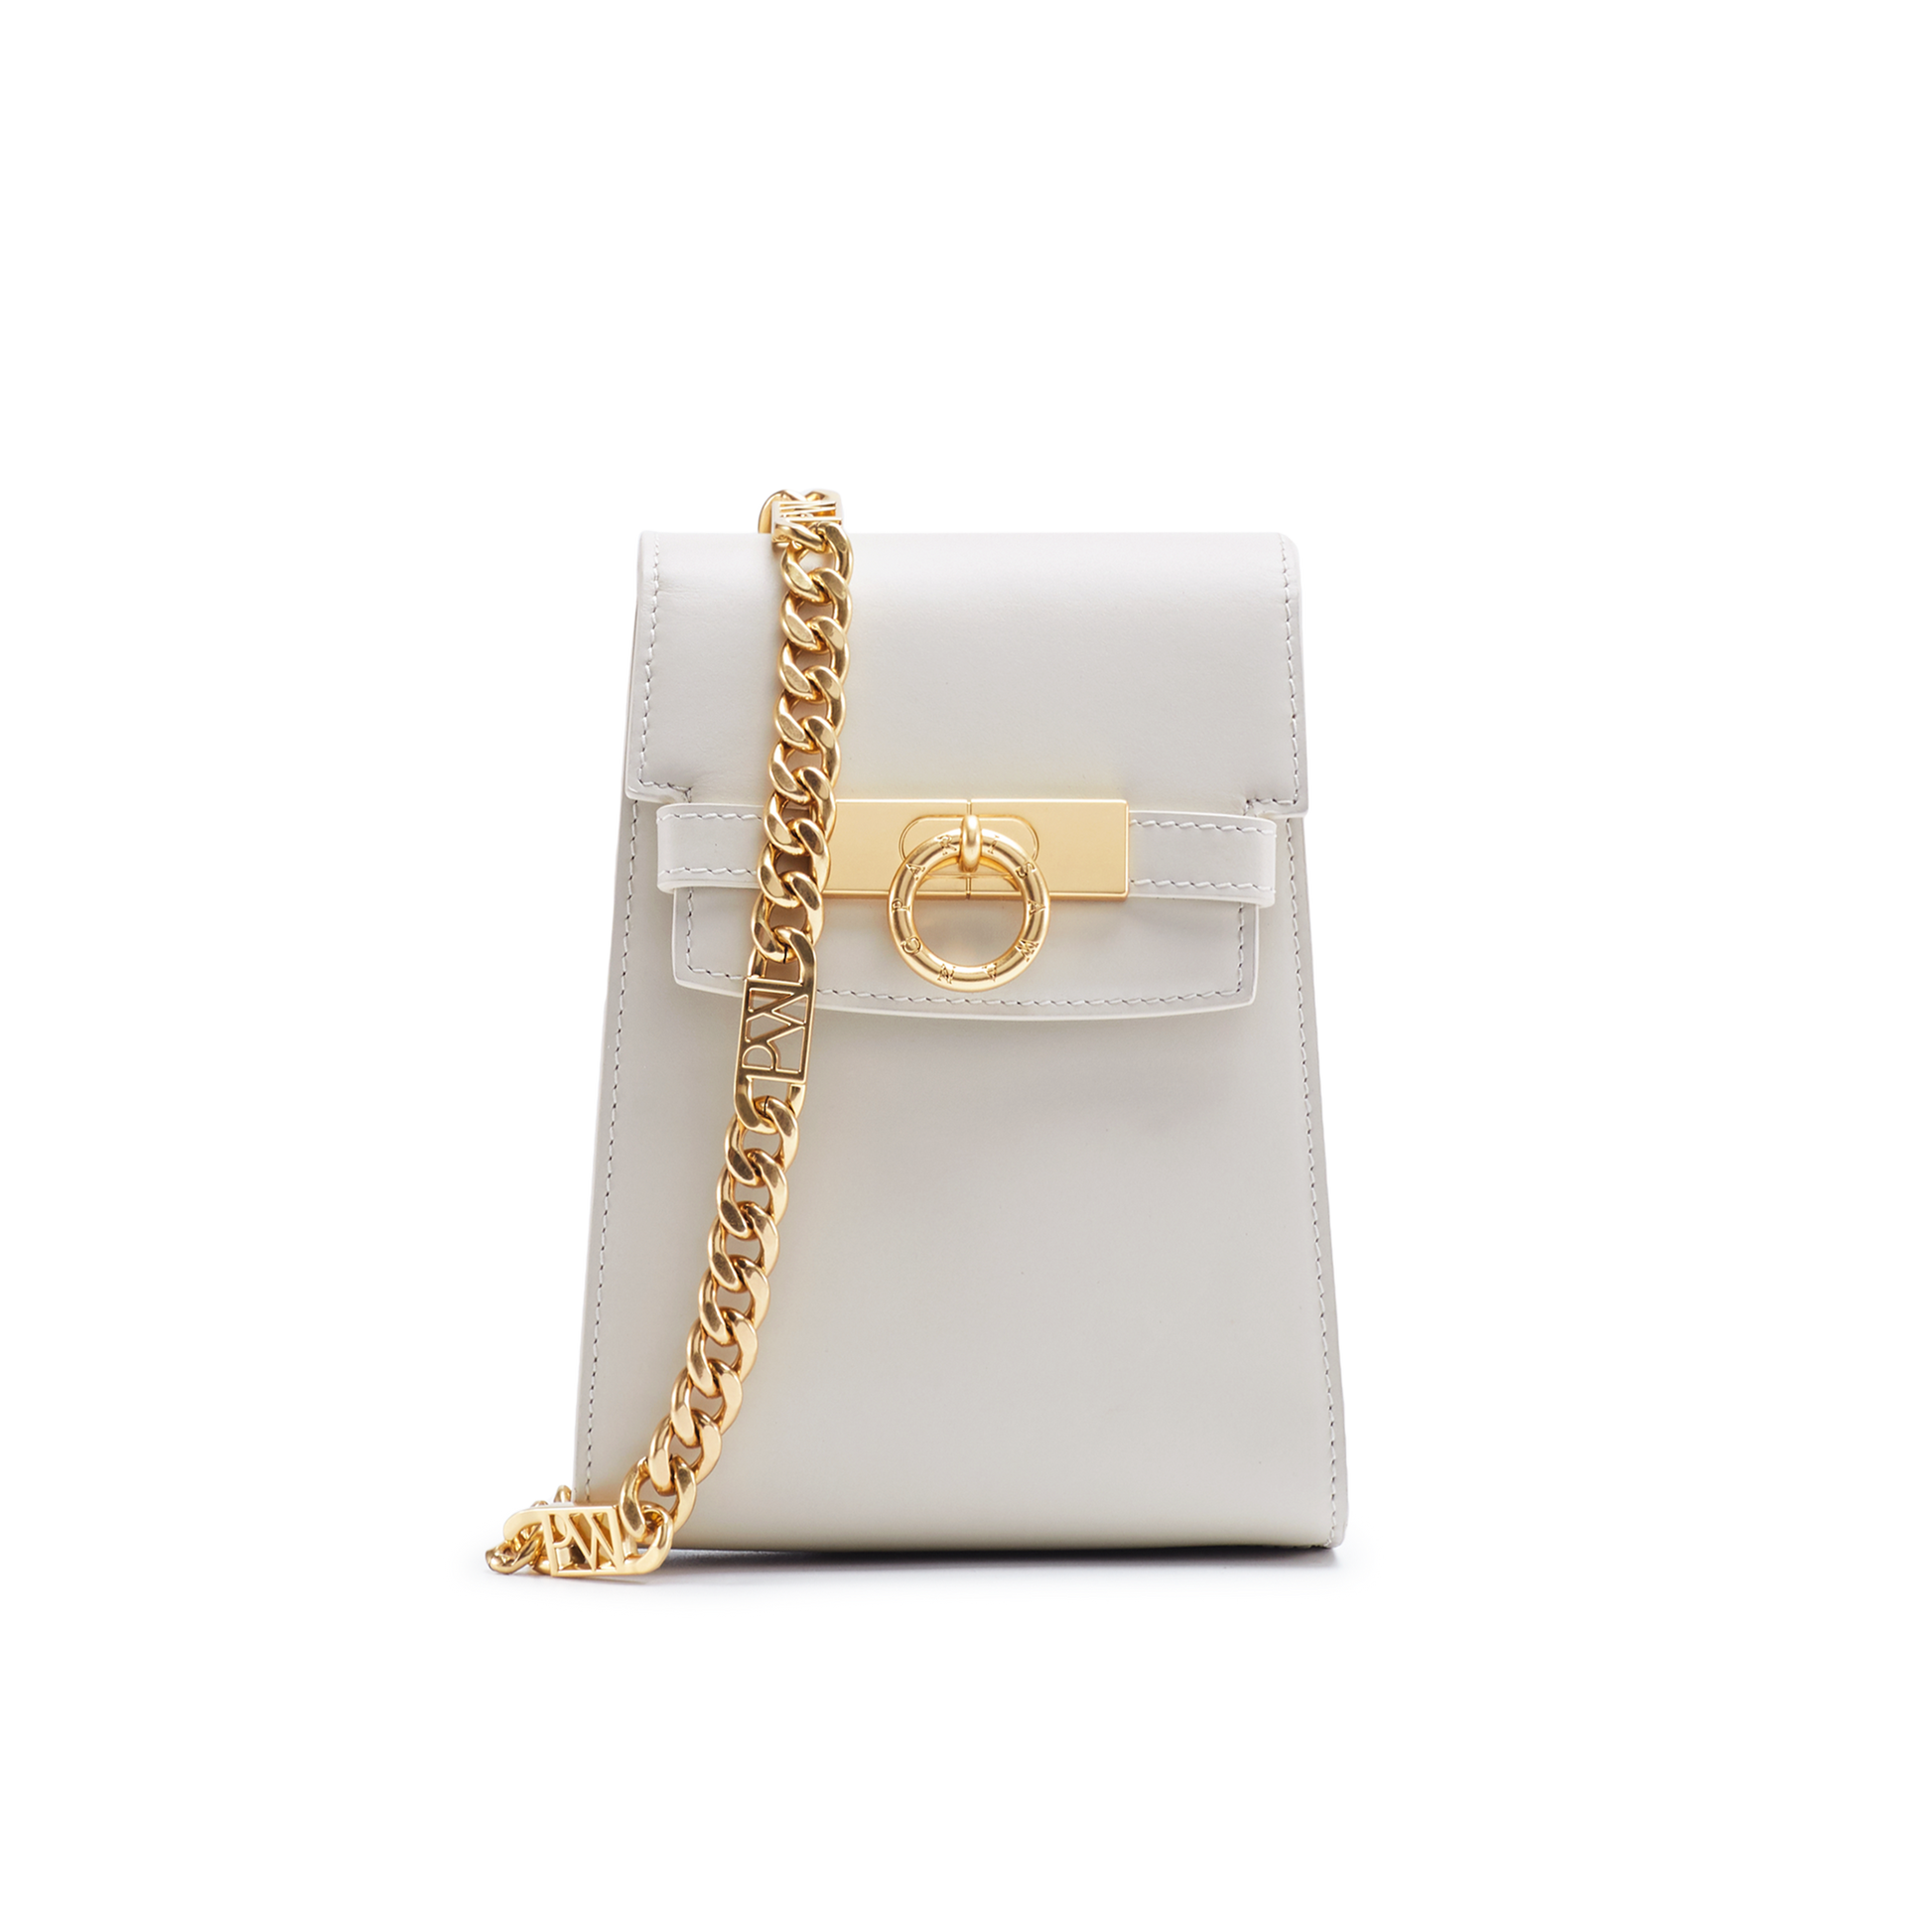 Unlocked Phone Bag in Cream | Parisa Wang 